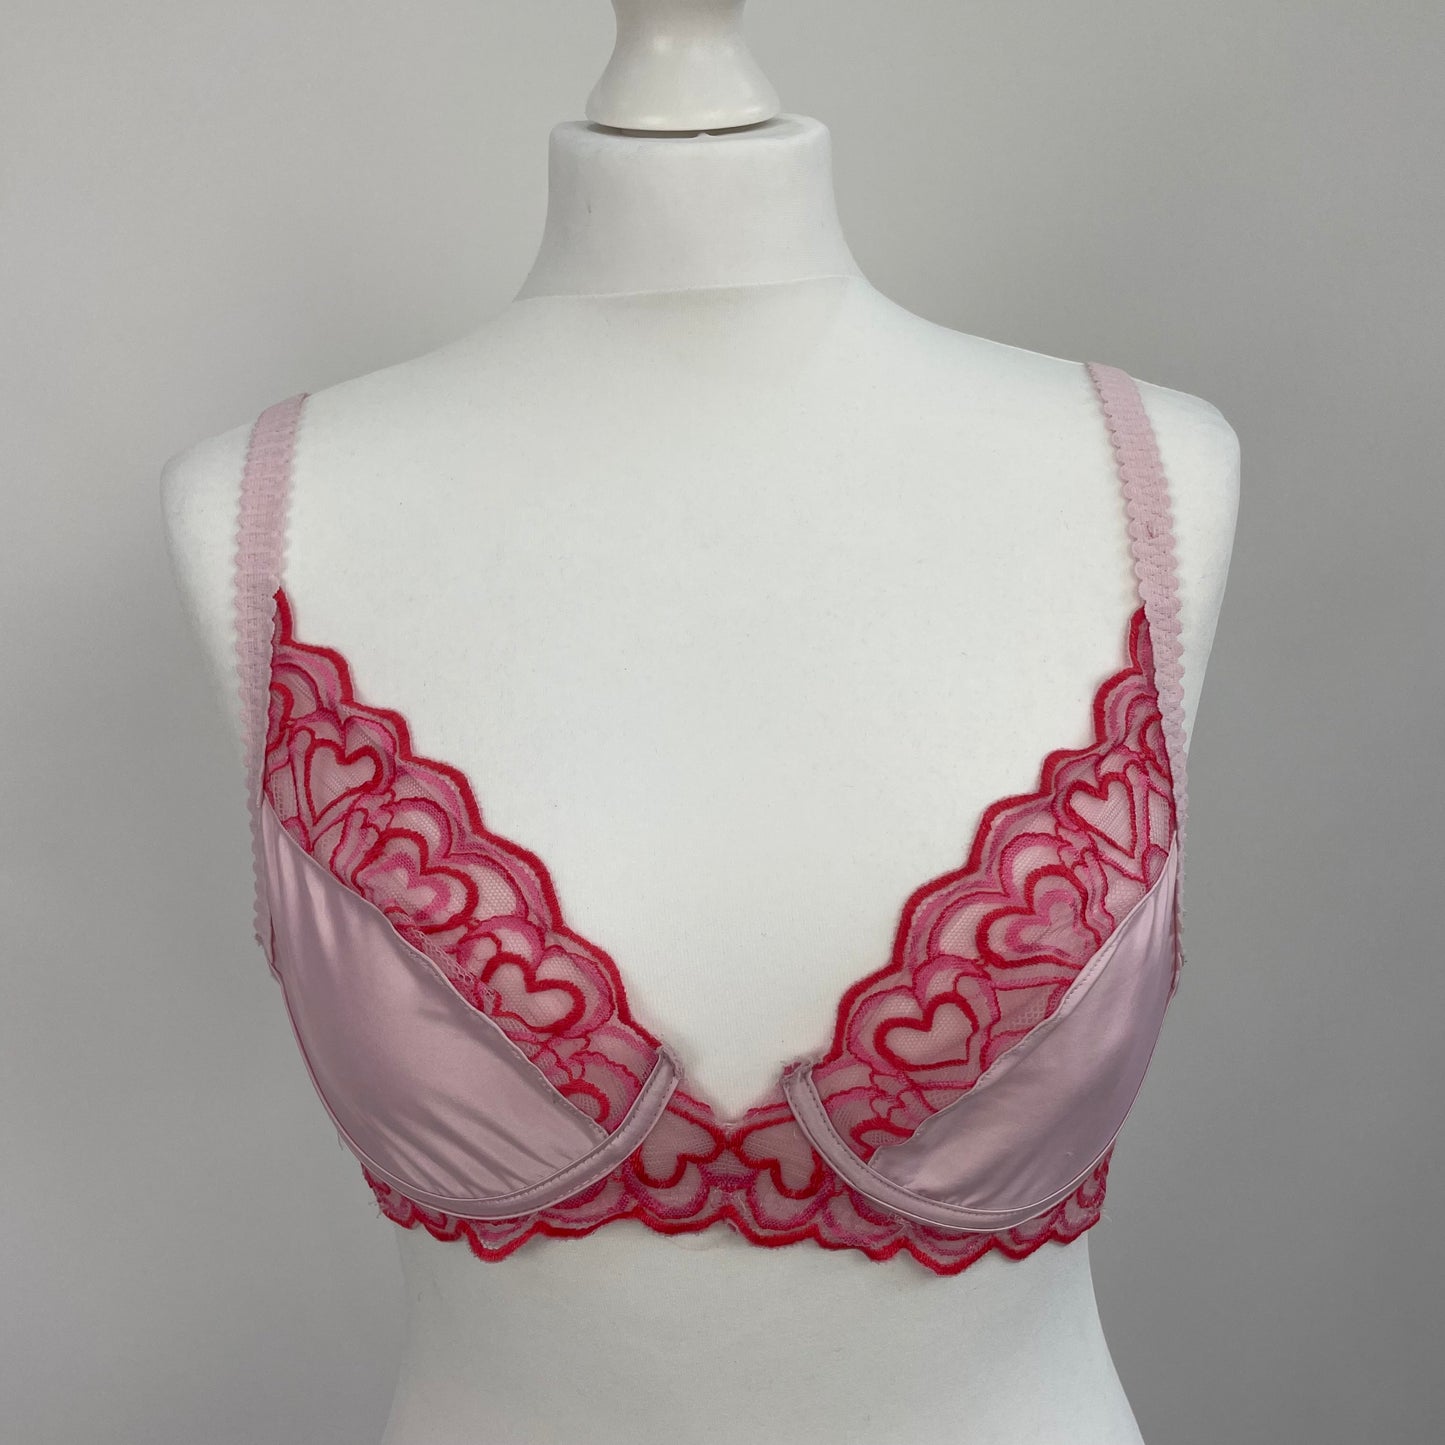 COASTAL GRANDMA DROP  small pink satin bra with heart lace detail